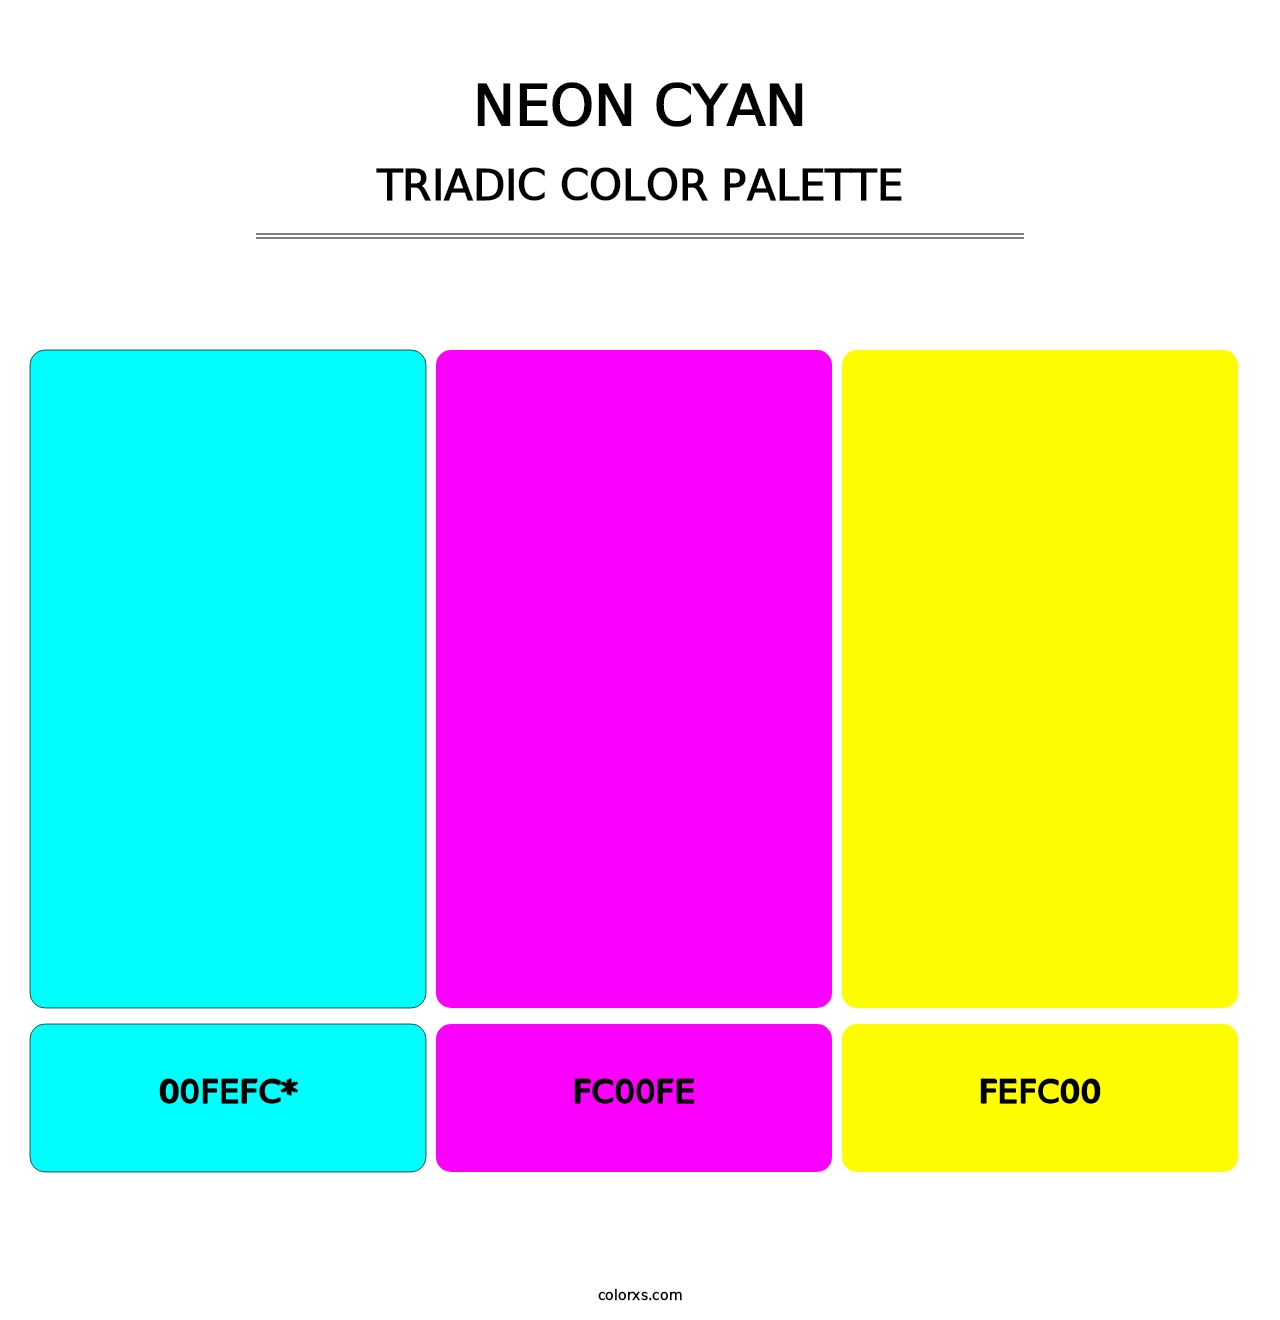 Neon Cyan - Triadic Color Palette